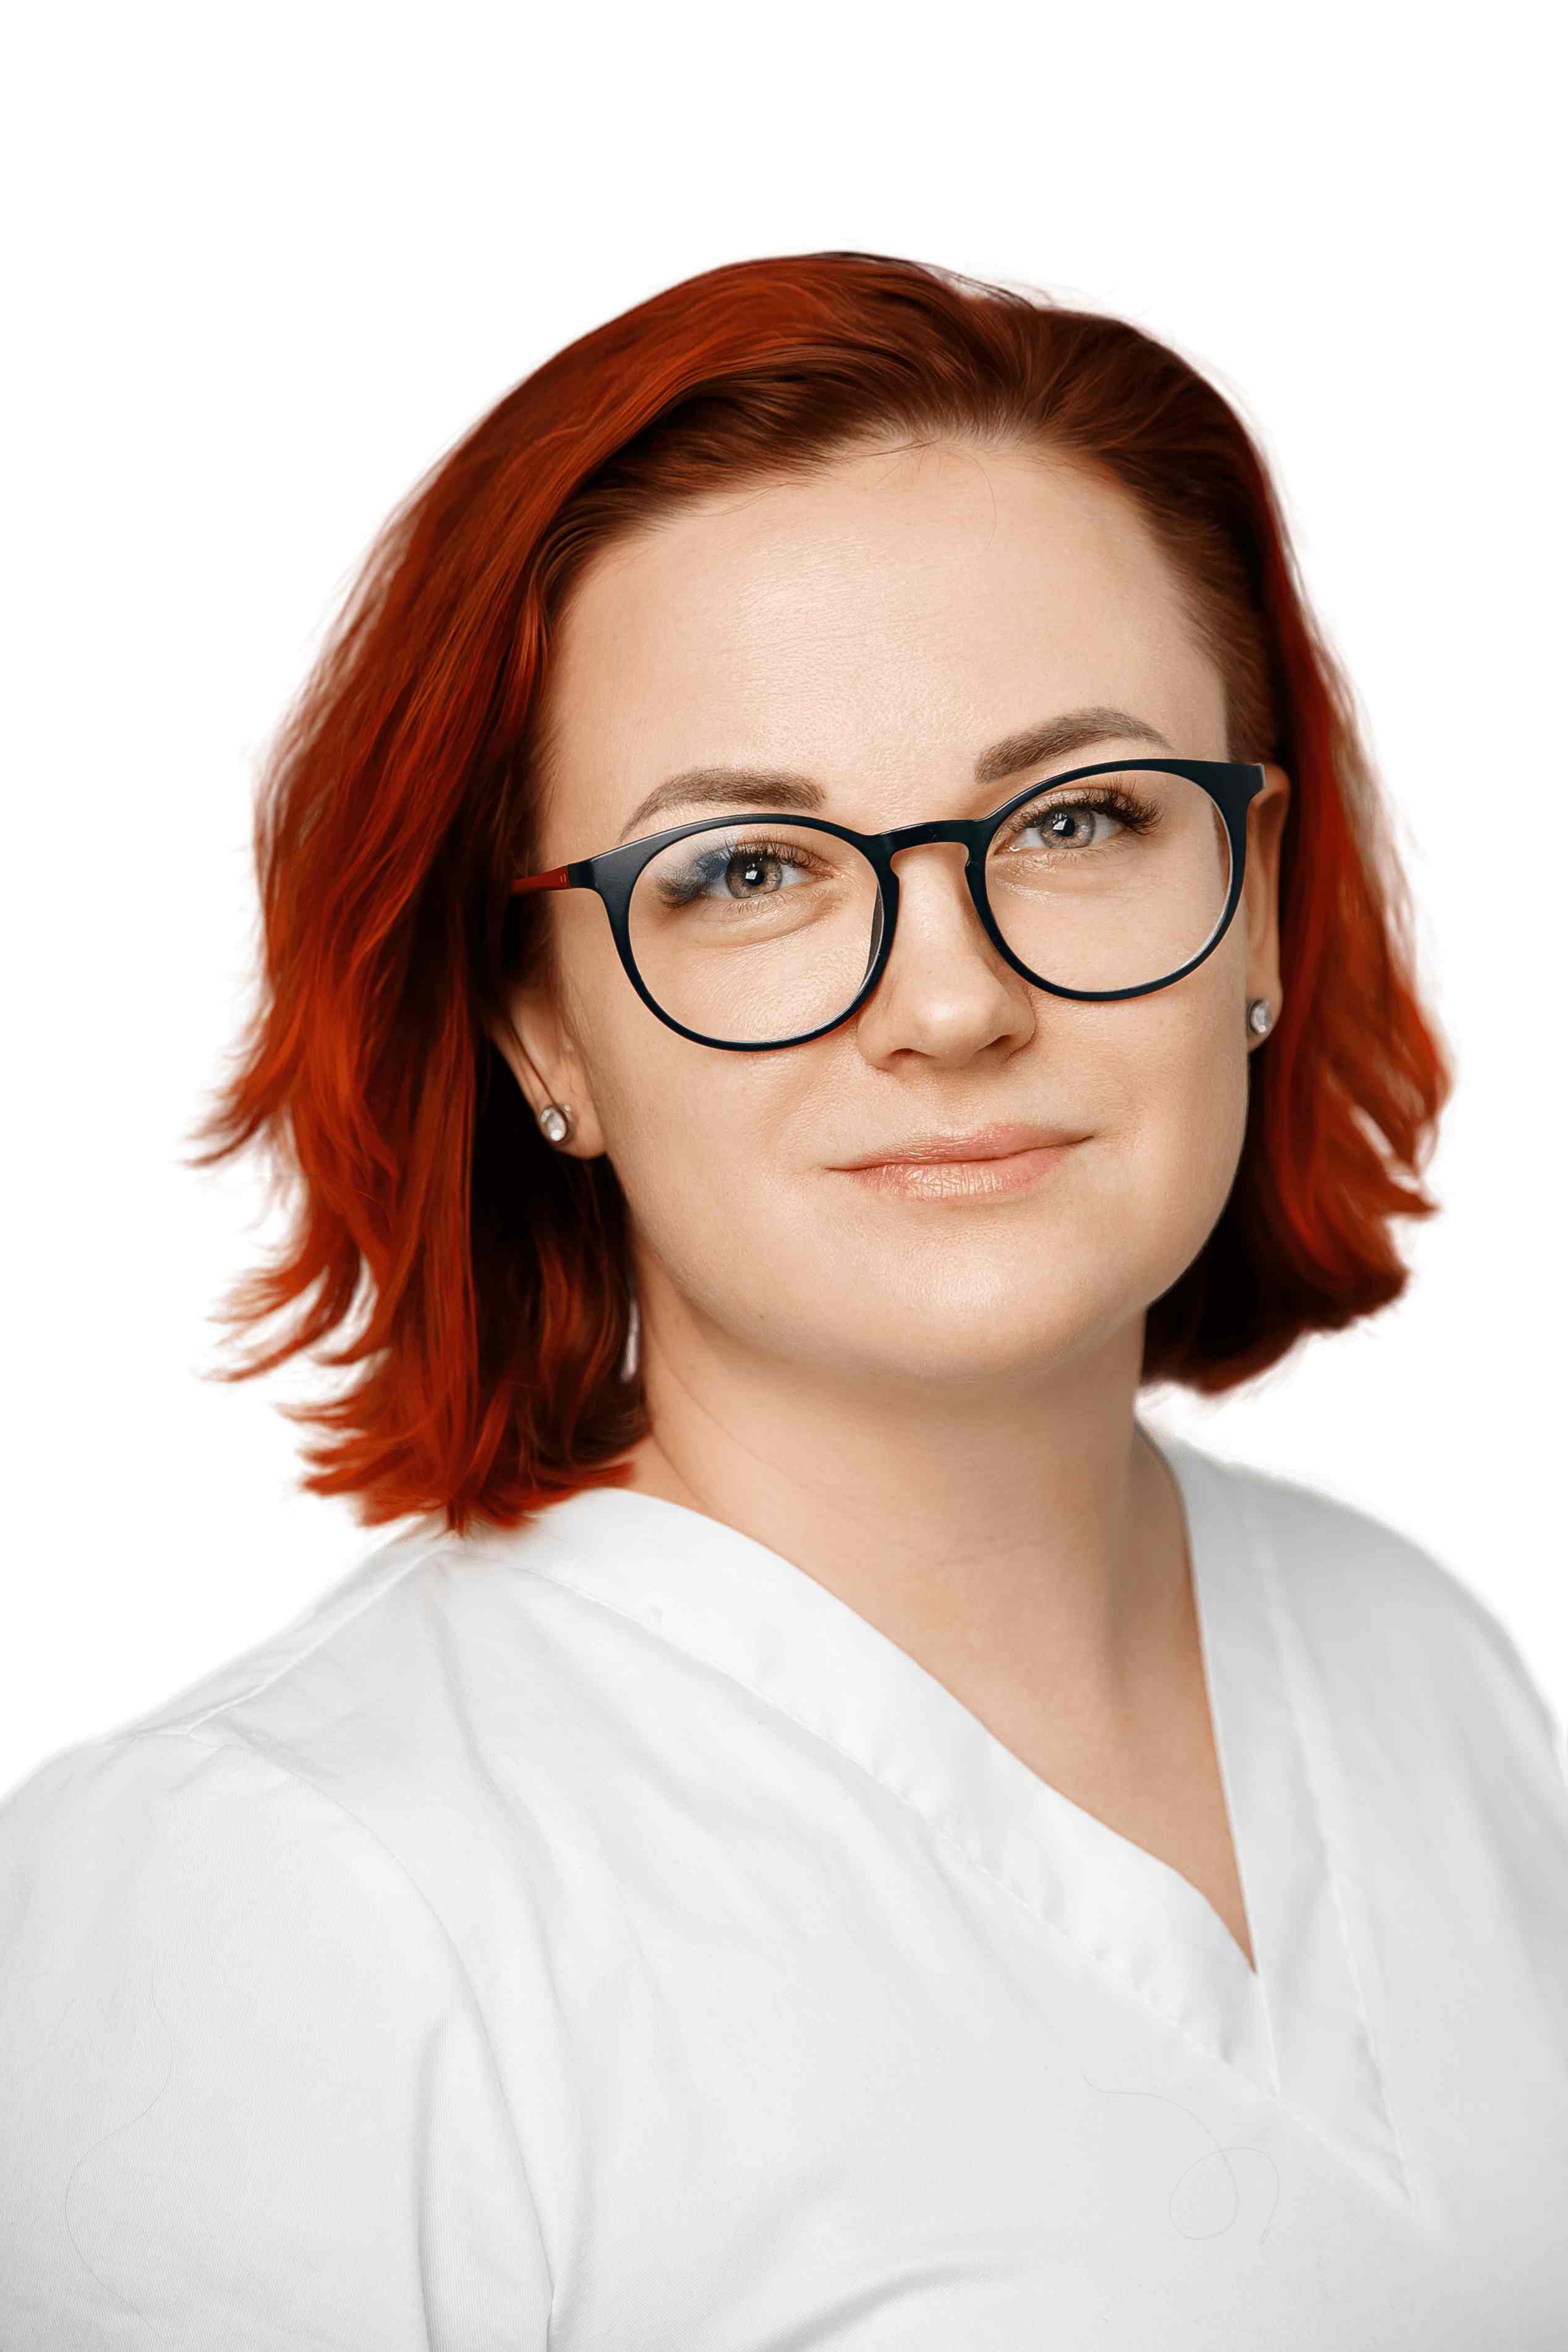 Орлова Надежда Валерьевна. сексолог, узи-специалист, андролог, репродуктолог (эко), уролог